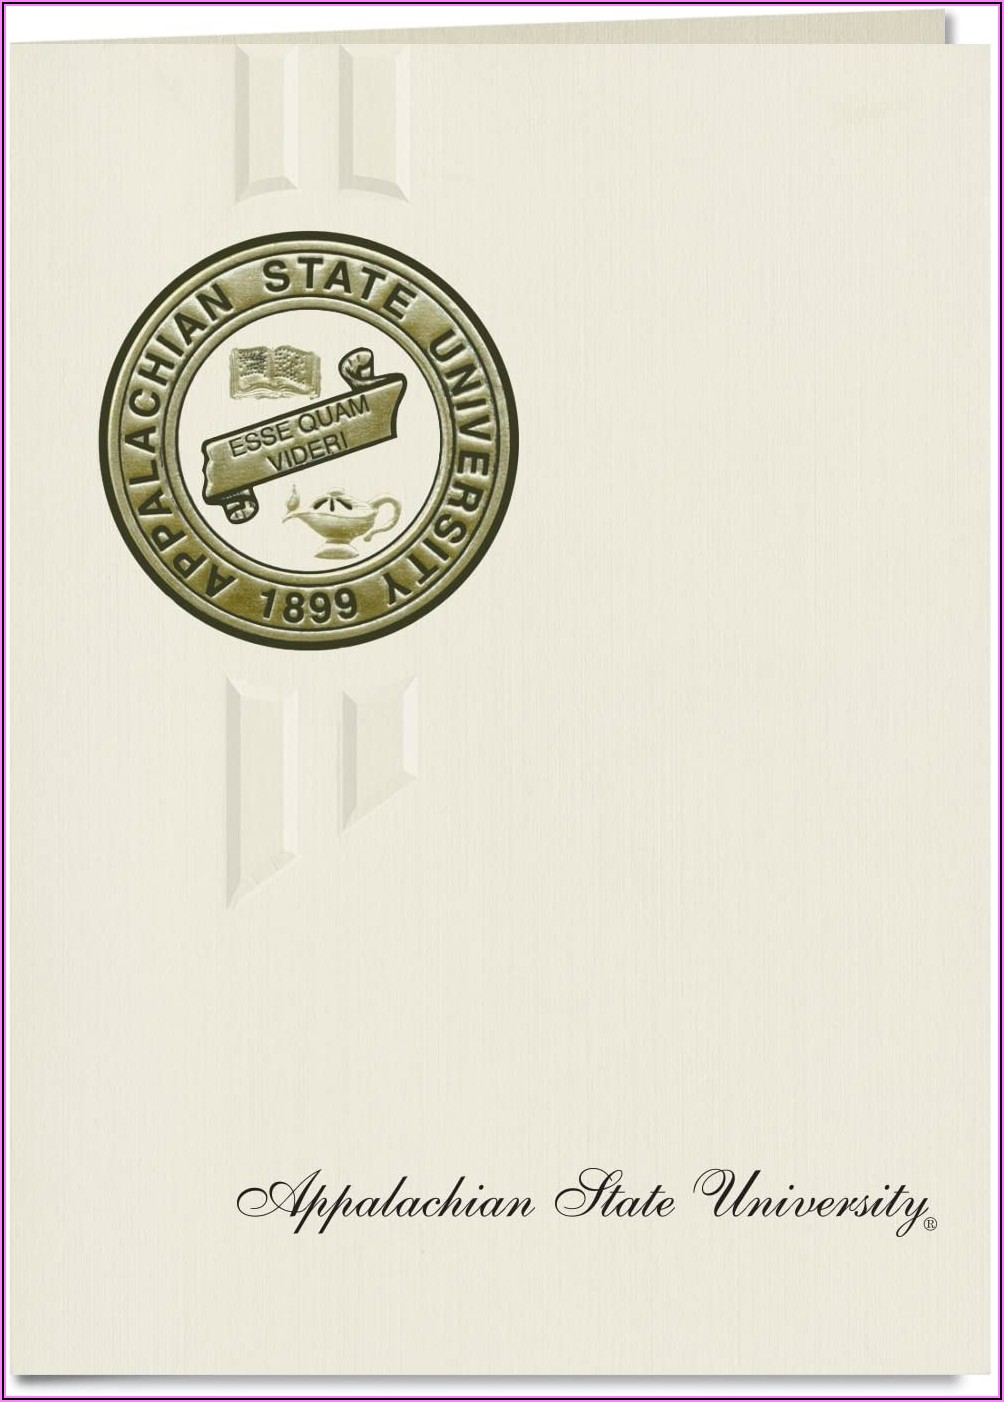 Appalachian State Graduation Announcements